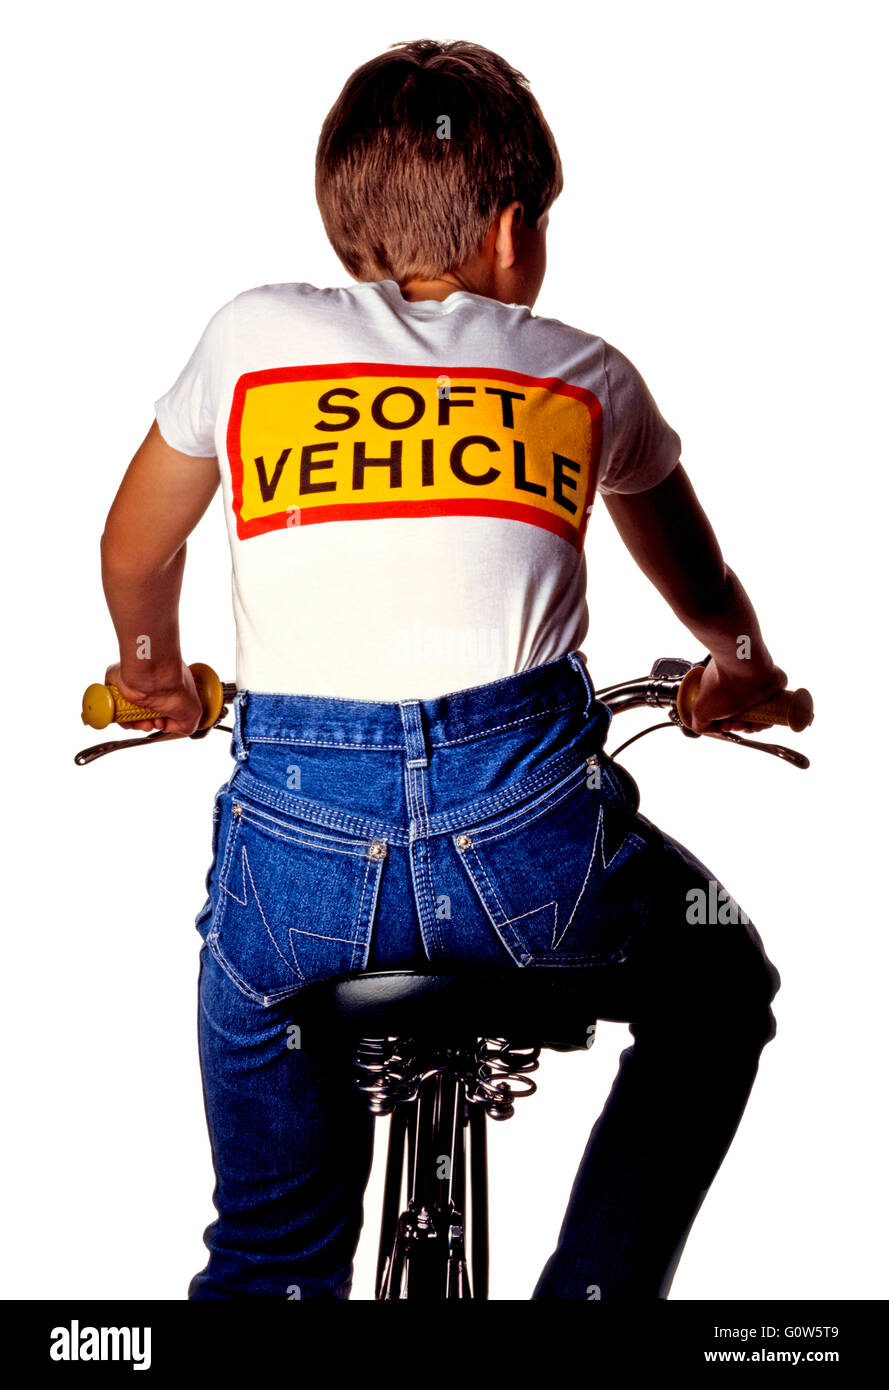 SOFT VEHICLE  BOY ON BICYCLE Stock Photo